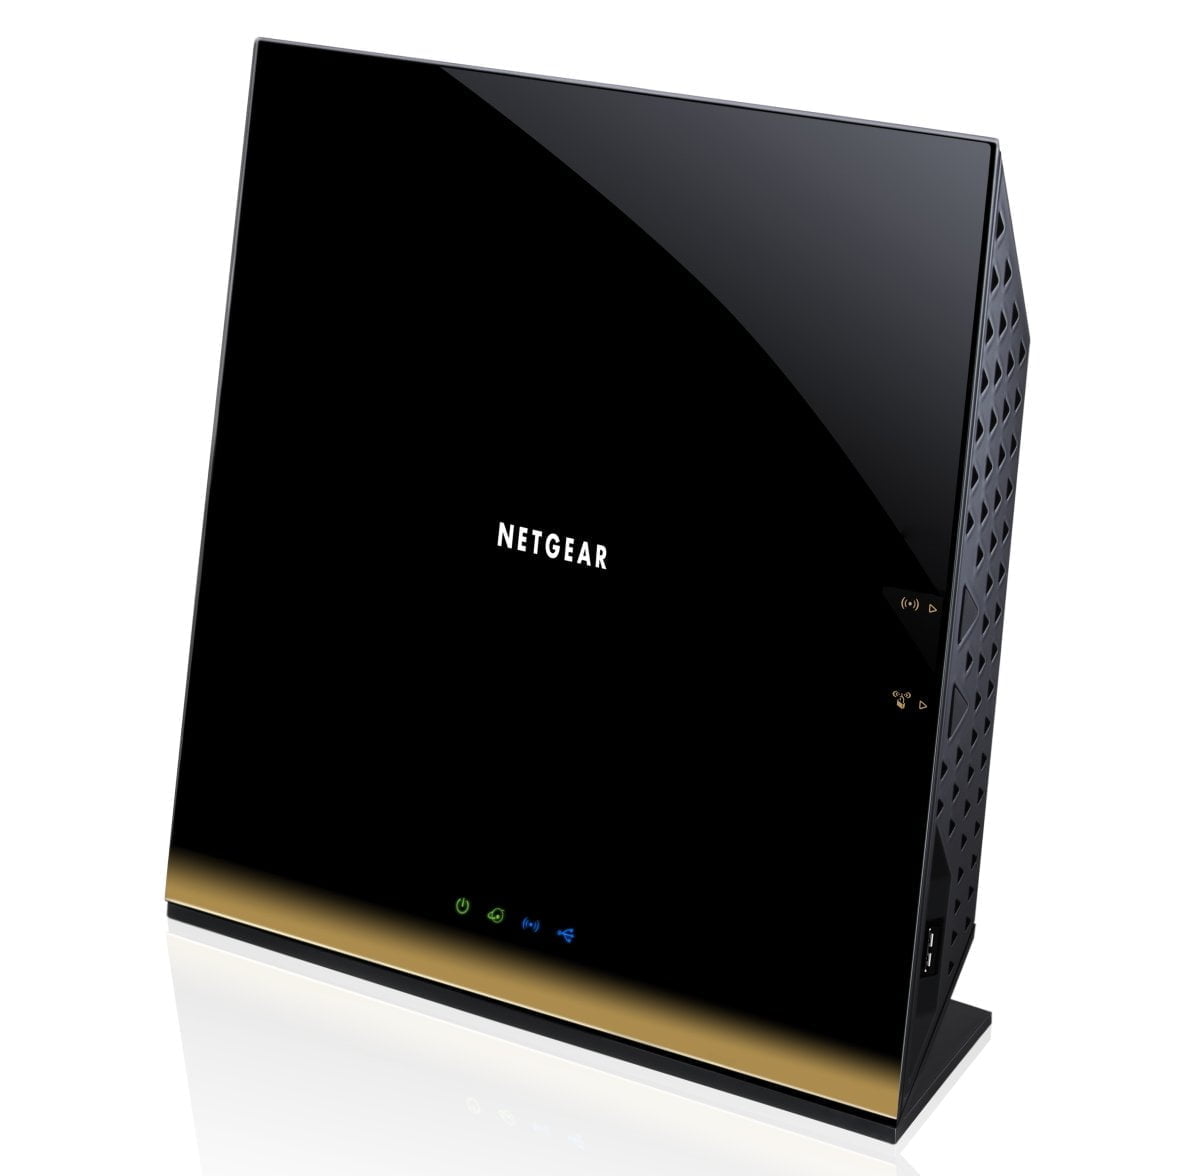 Review: Netgear R6300 router 10